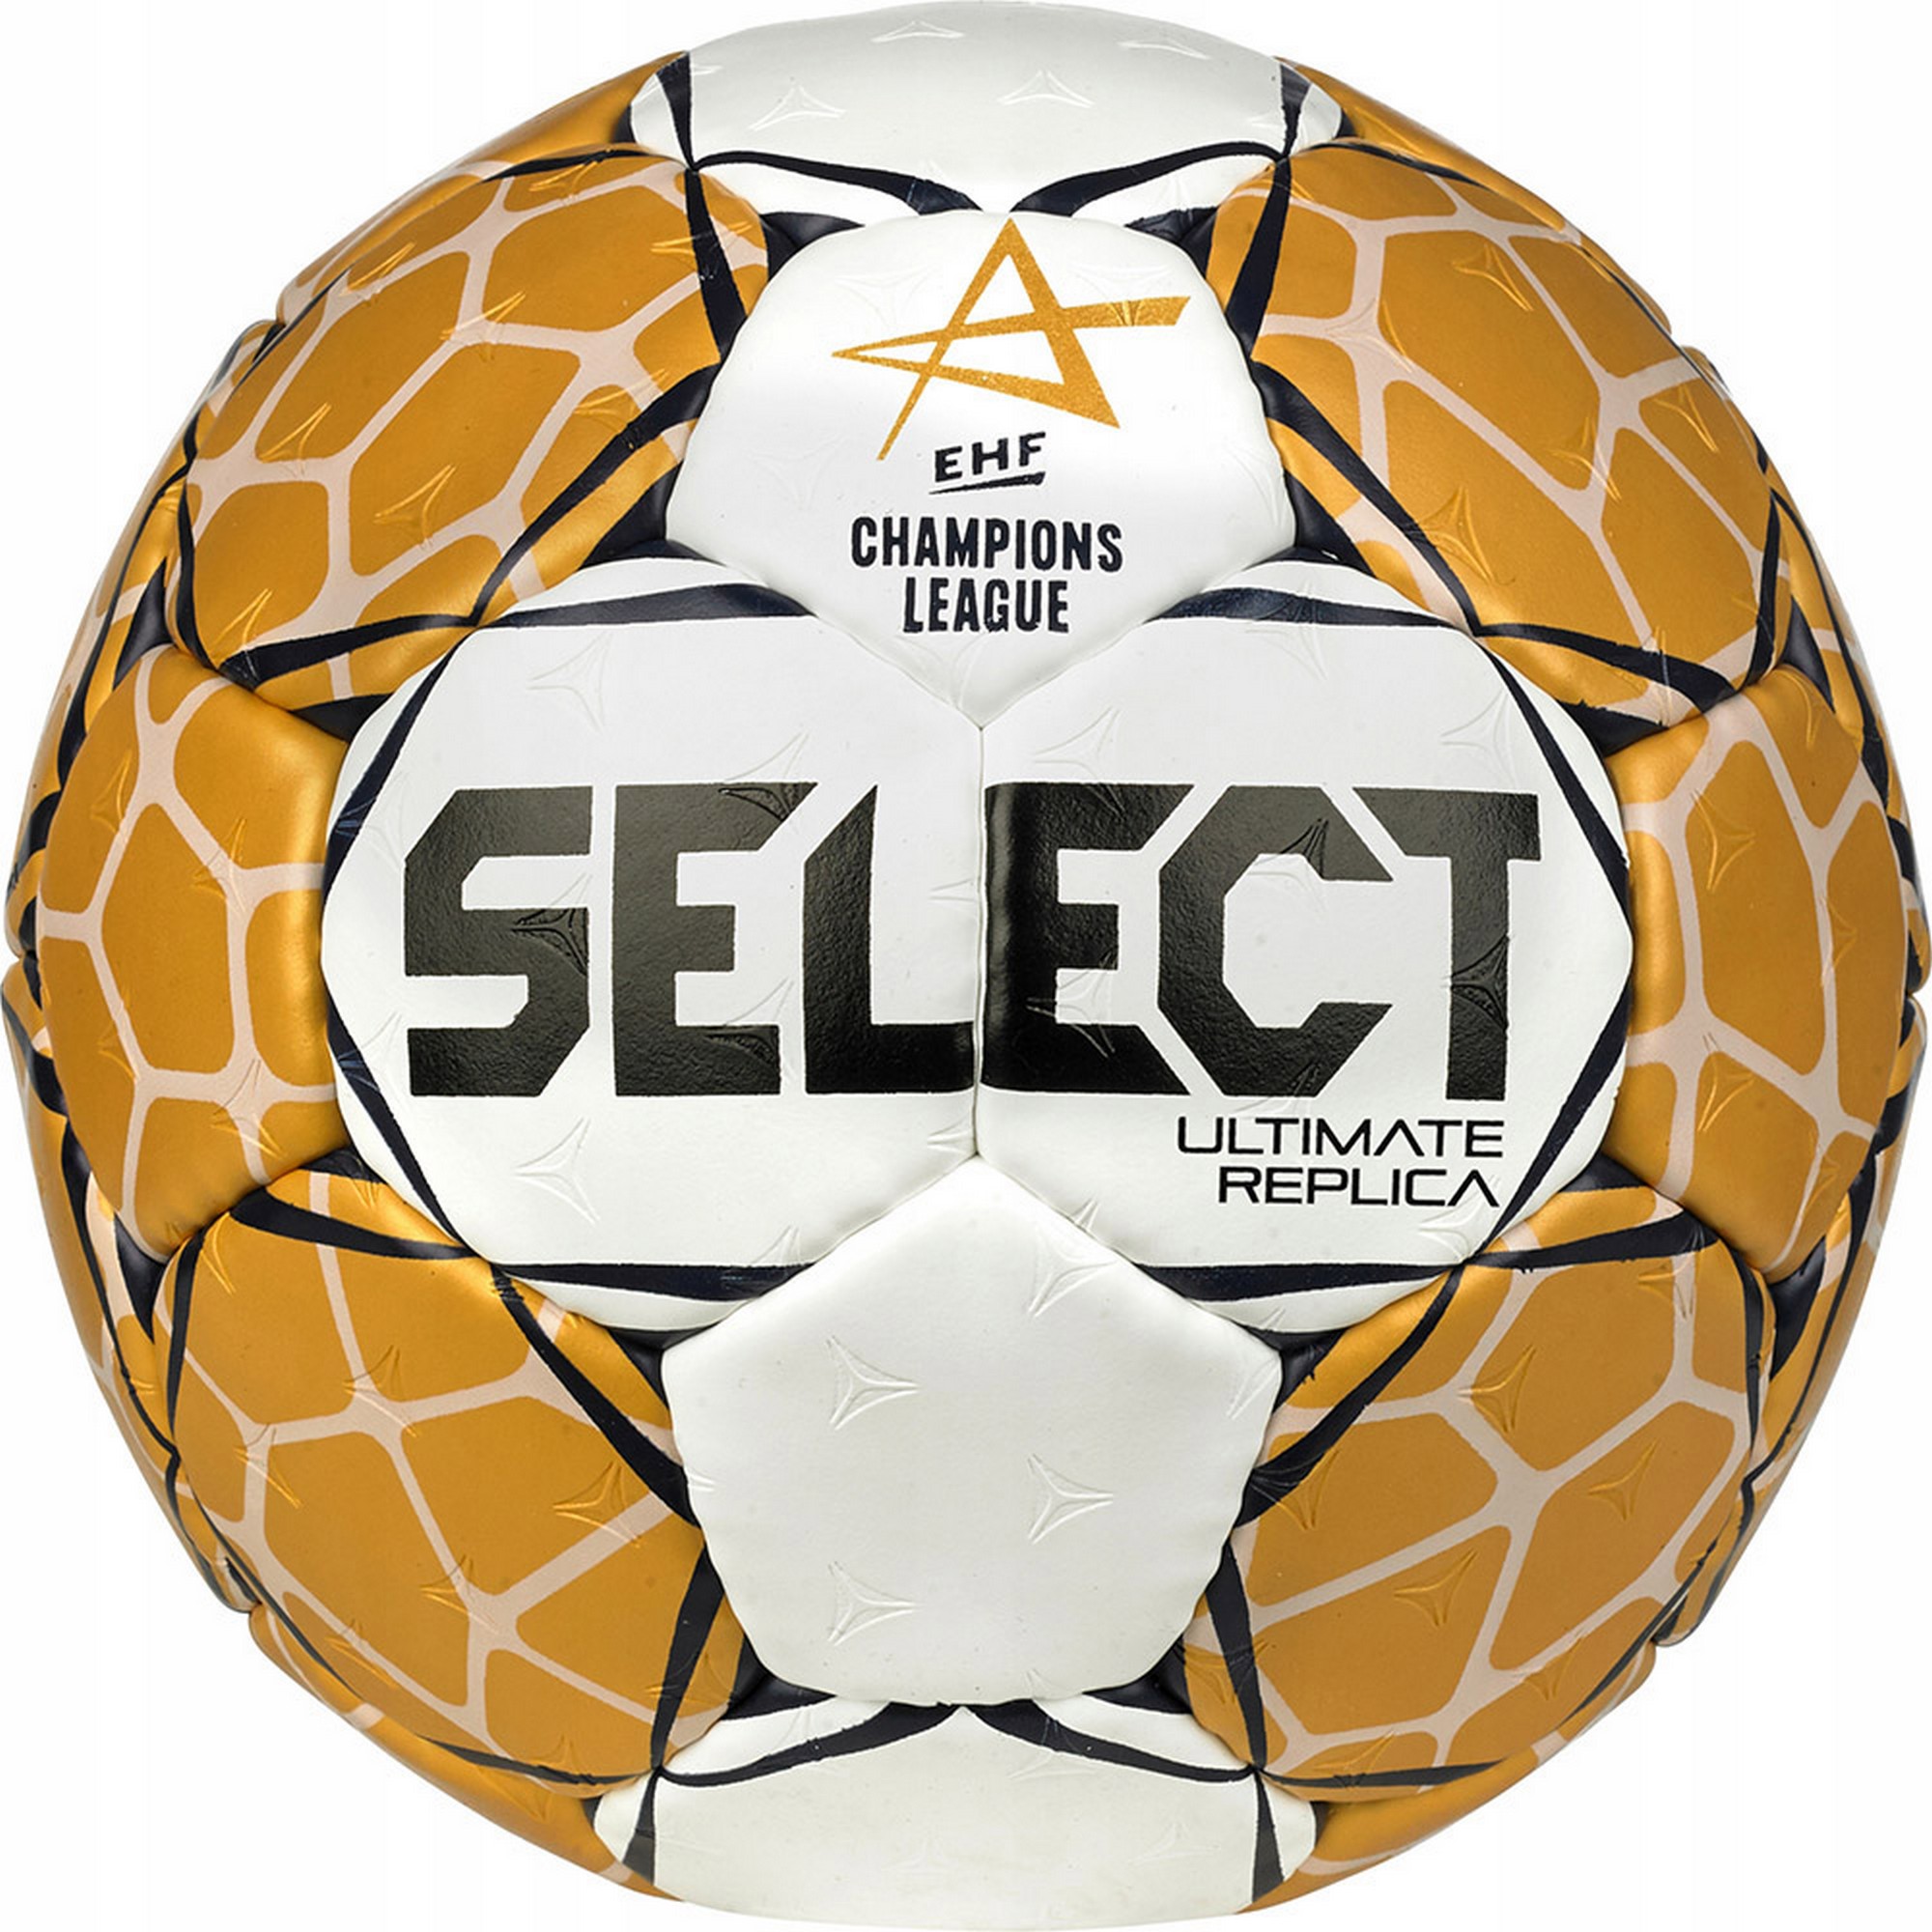   Select Ultimate Replica v23, EHF Appr 1670850900 .1